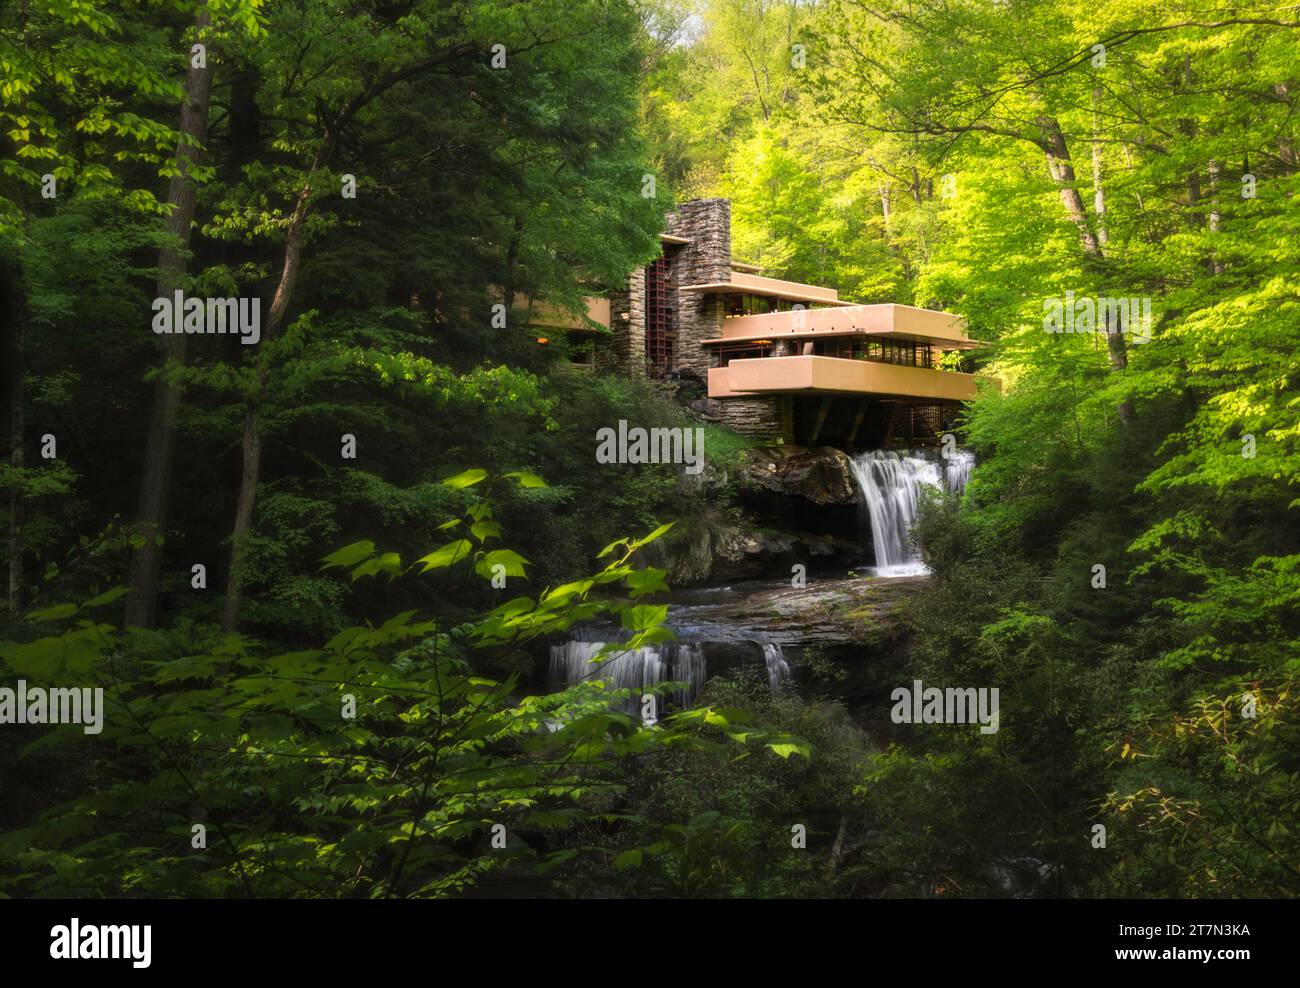 Falling Water, Frank Lloyd Wright designed home masterpiece, rural forest in Laurel Highlands, Farmington, Pennsylvania, USA Stock Photo